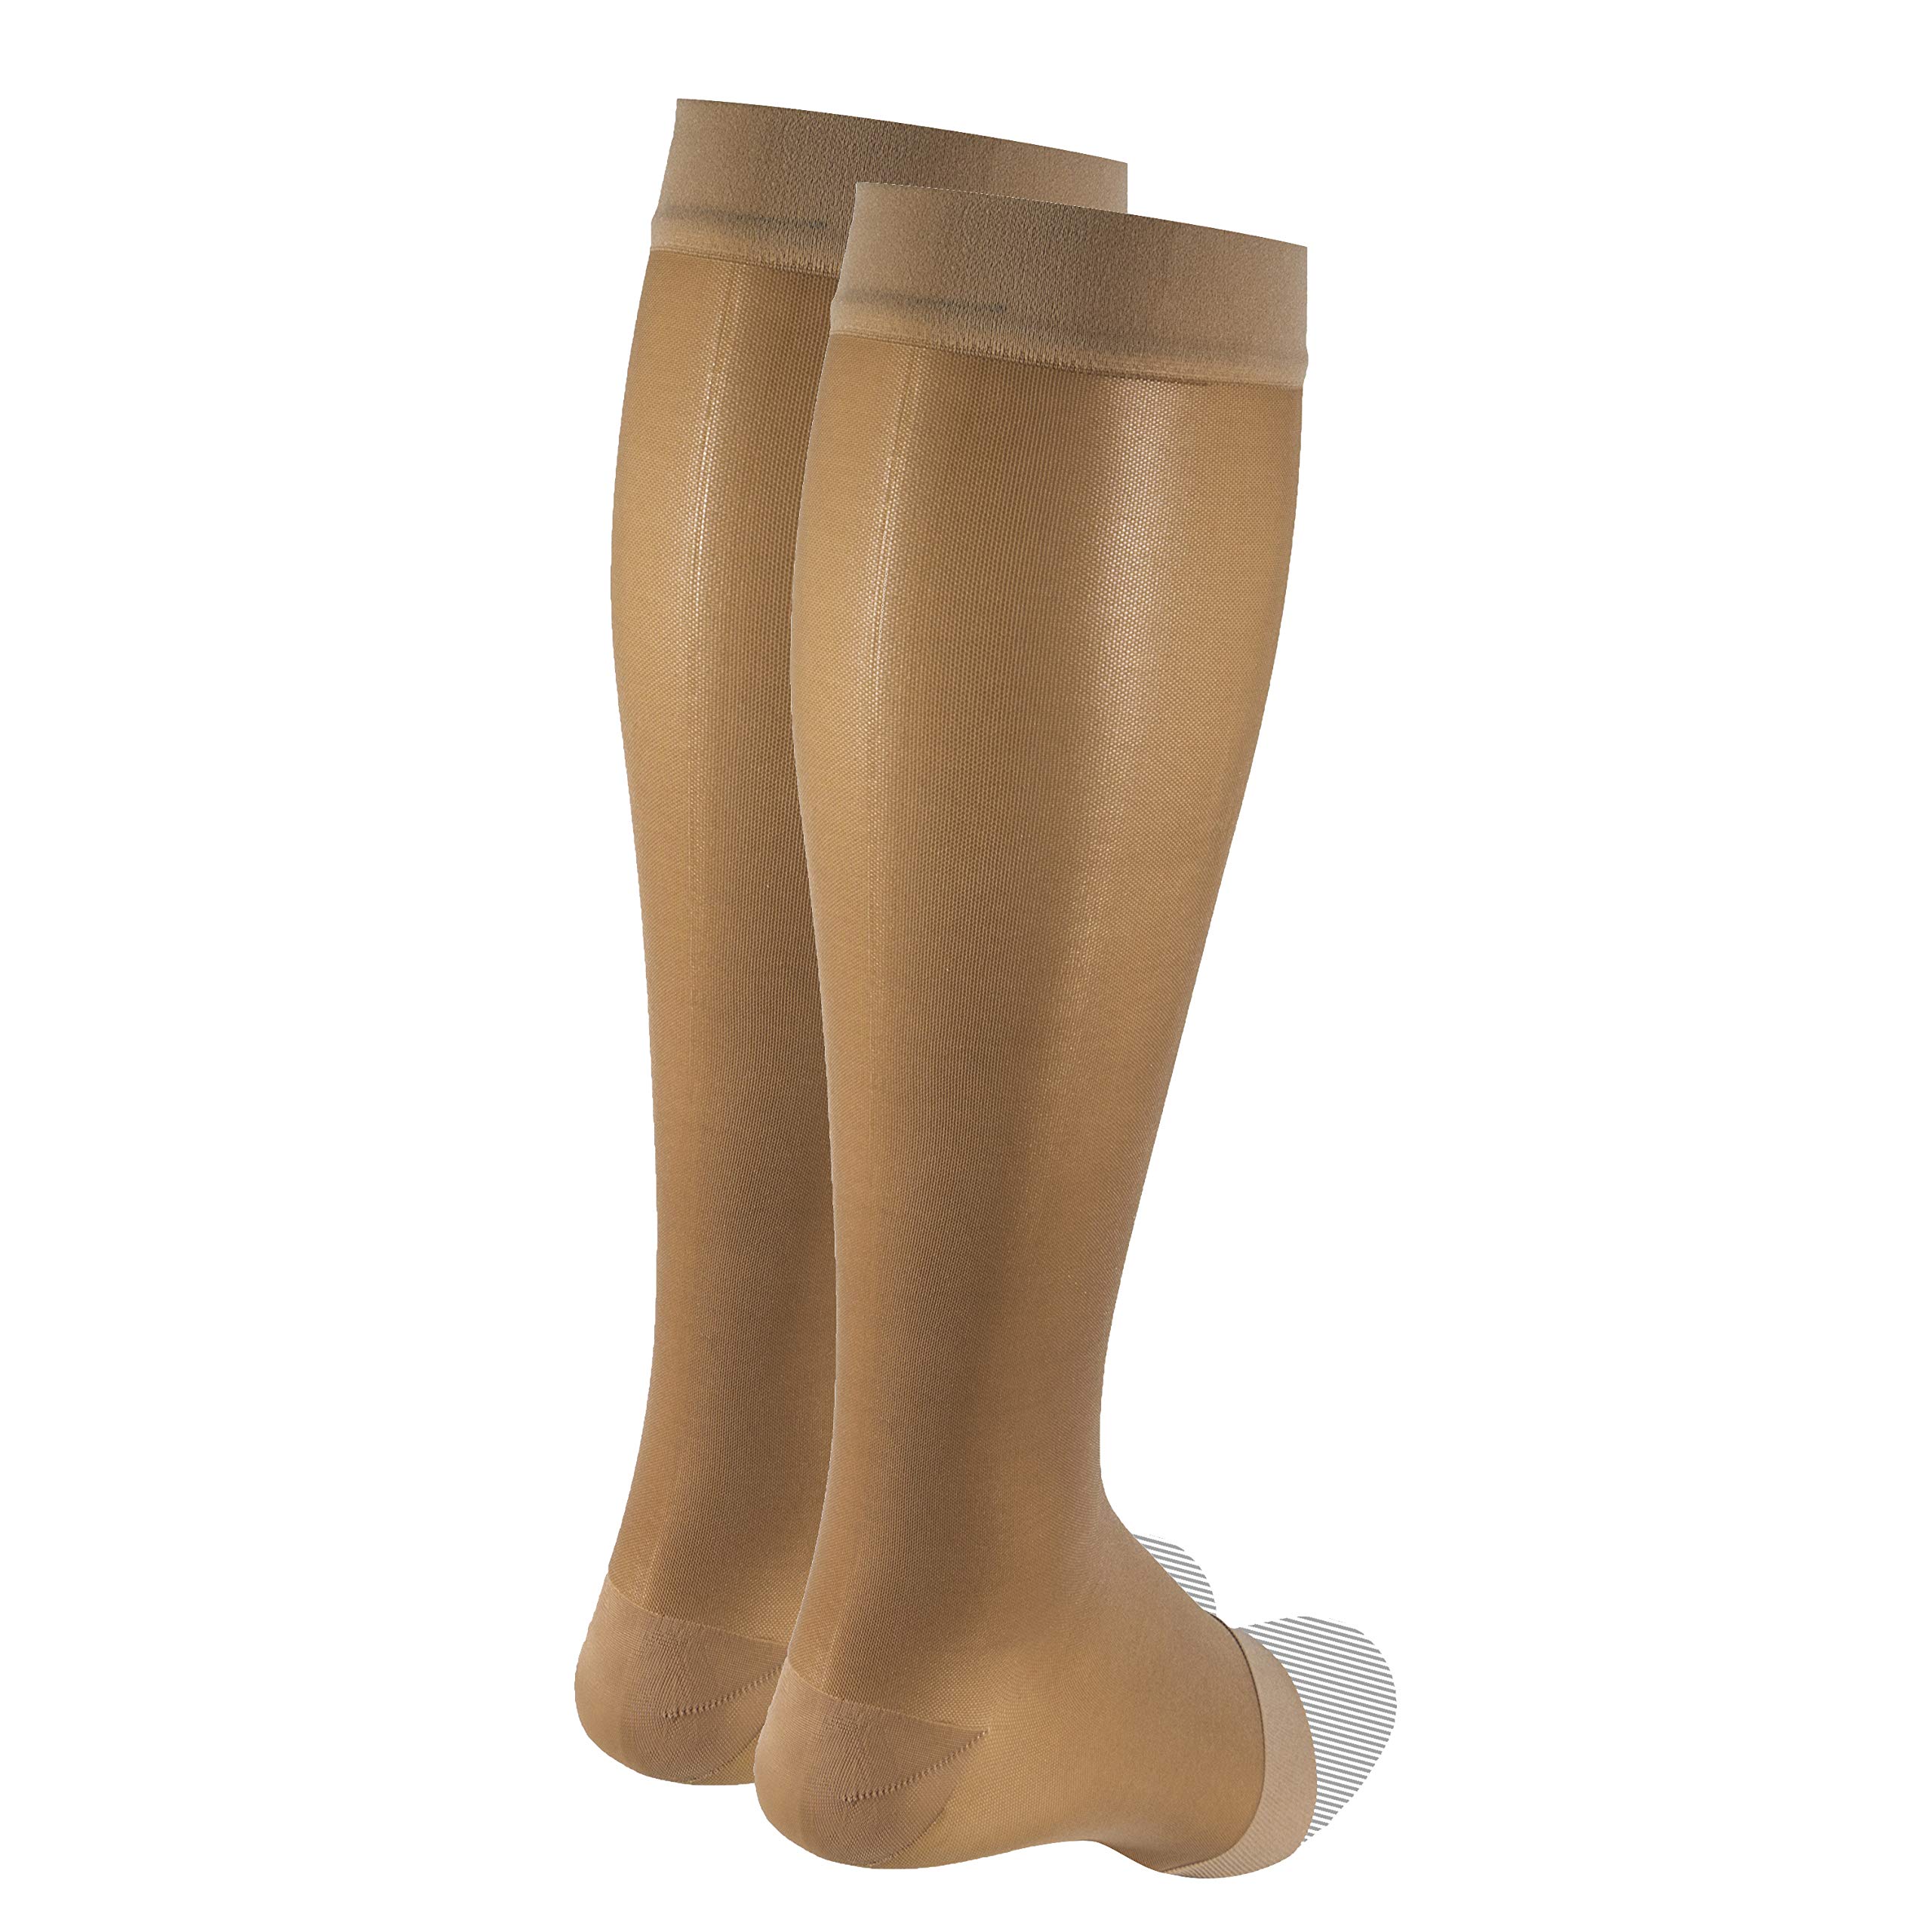 Truform Sheer Compression Stockings, 15-20 mmHg, Women's Knee High Length, Open Toe, 20 Denier, Beige, Large